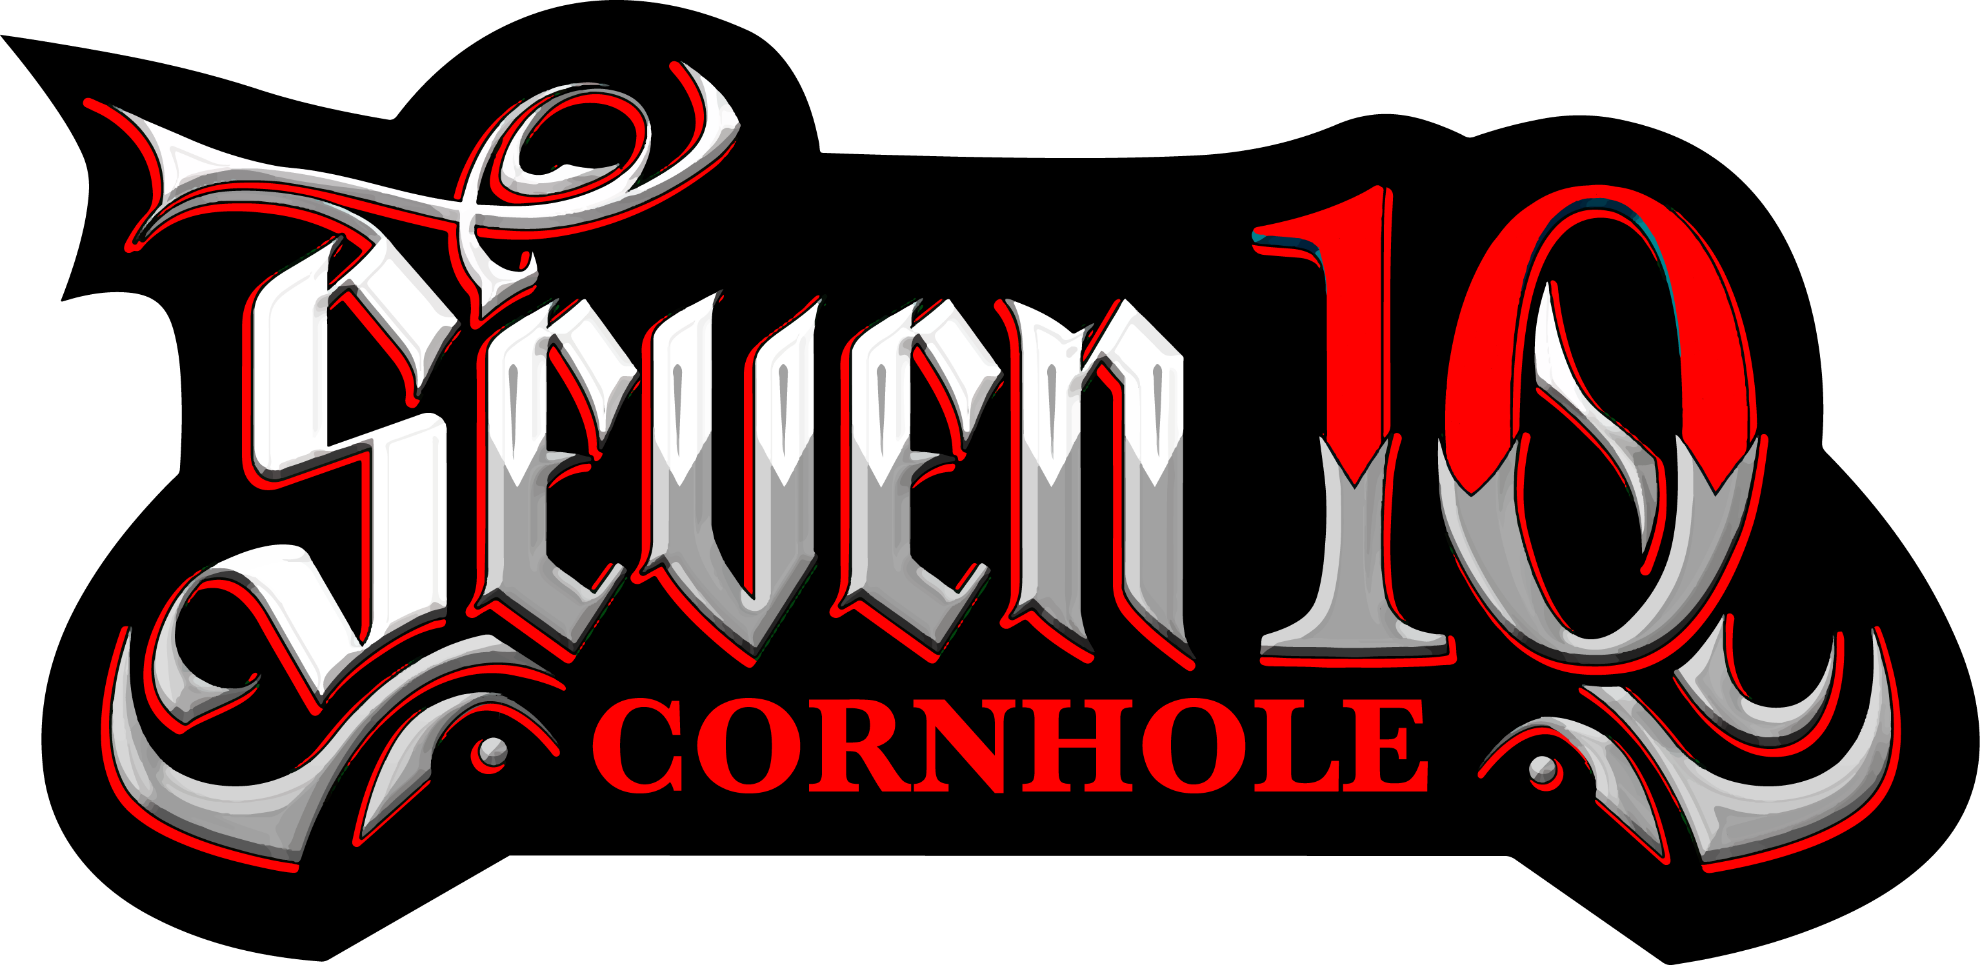 Seven10 Cornhole